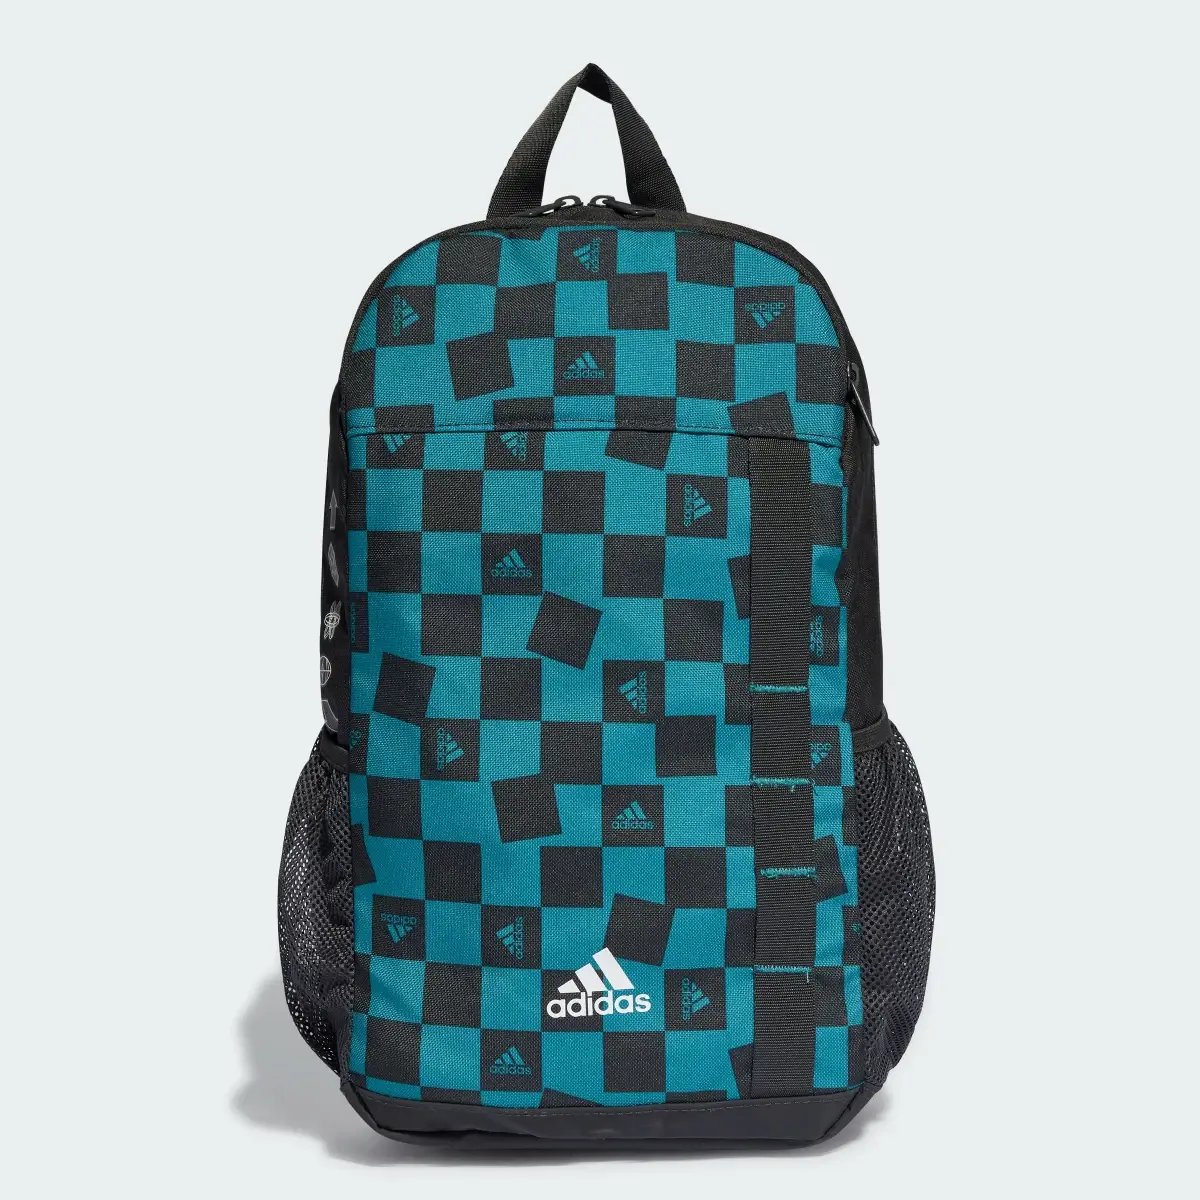 Adidas ARKD3 Backpack. 2